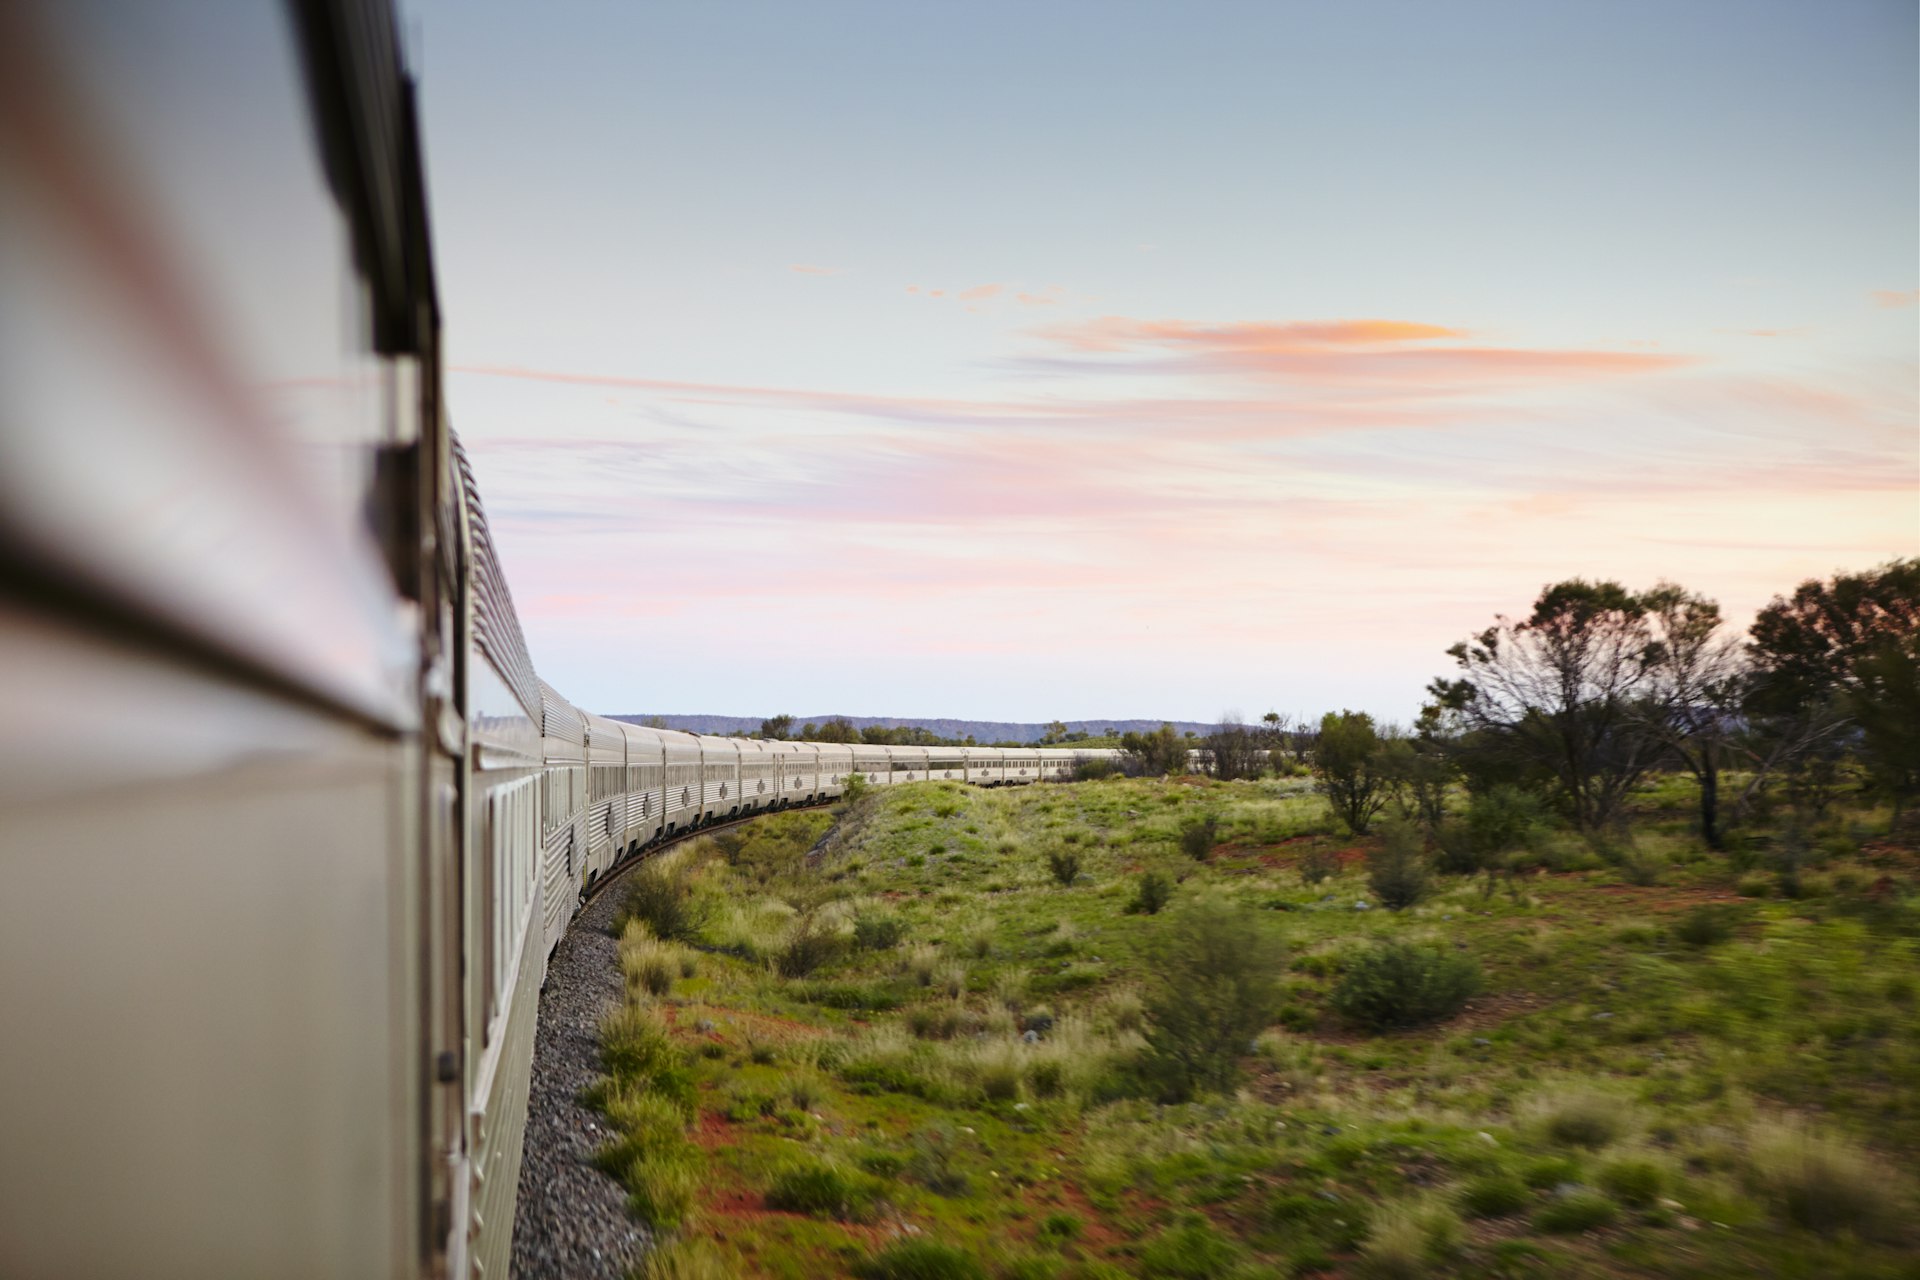 The Ghan railway train speeding across Australia from Adelaide to Darwin.